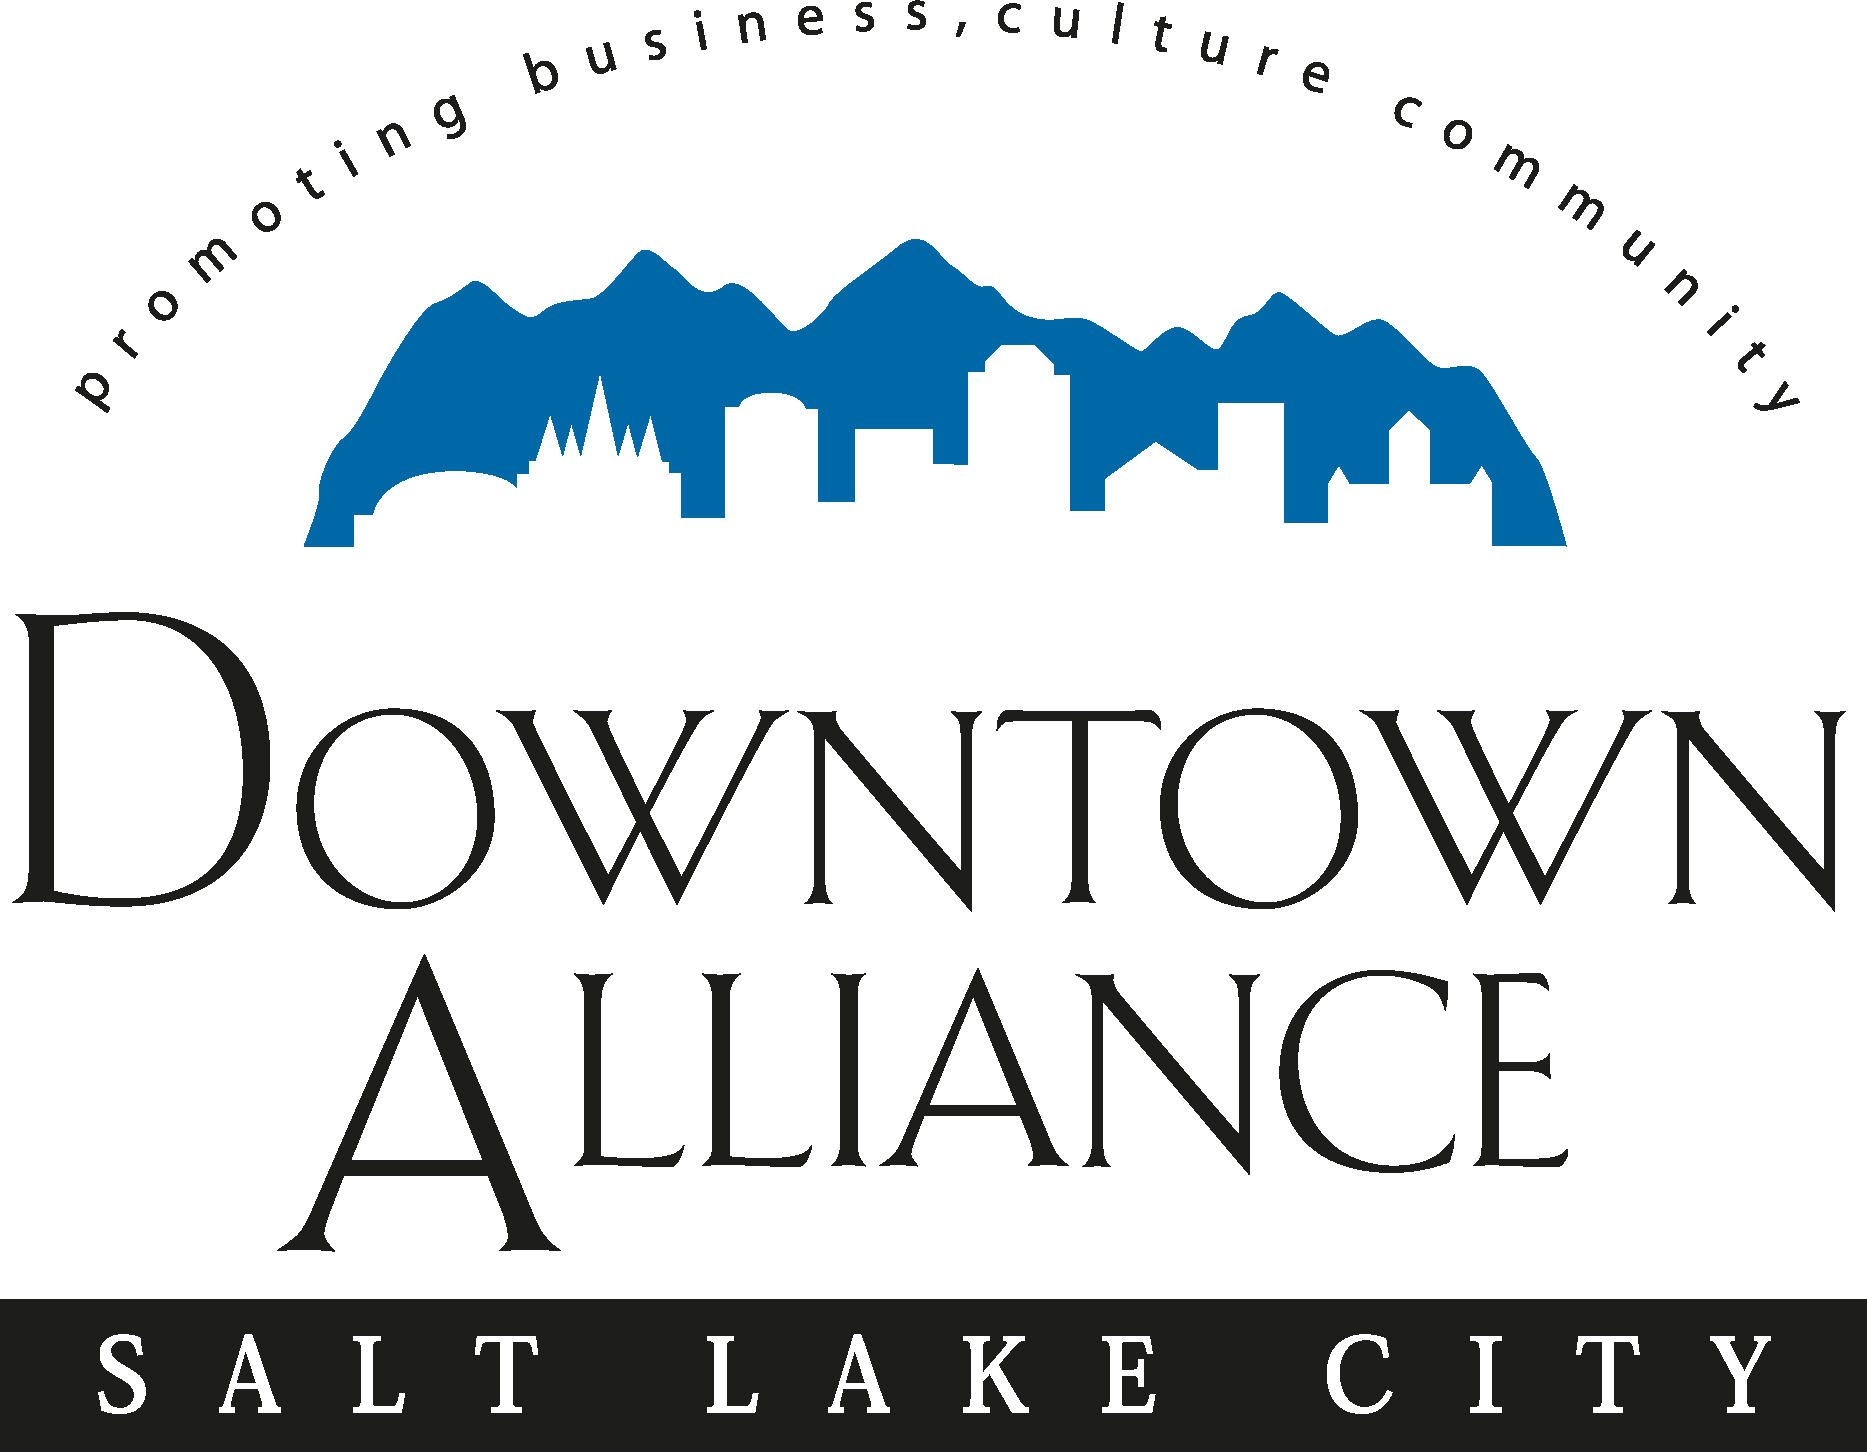 Downtown Alliance Logo Vector